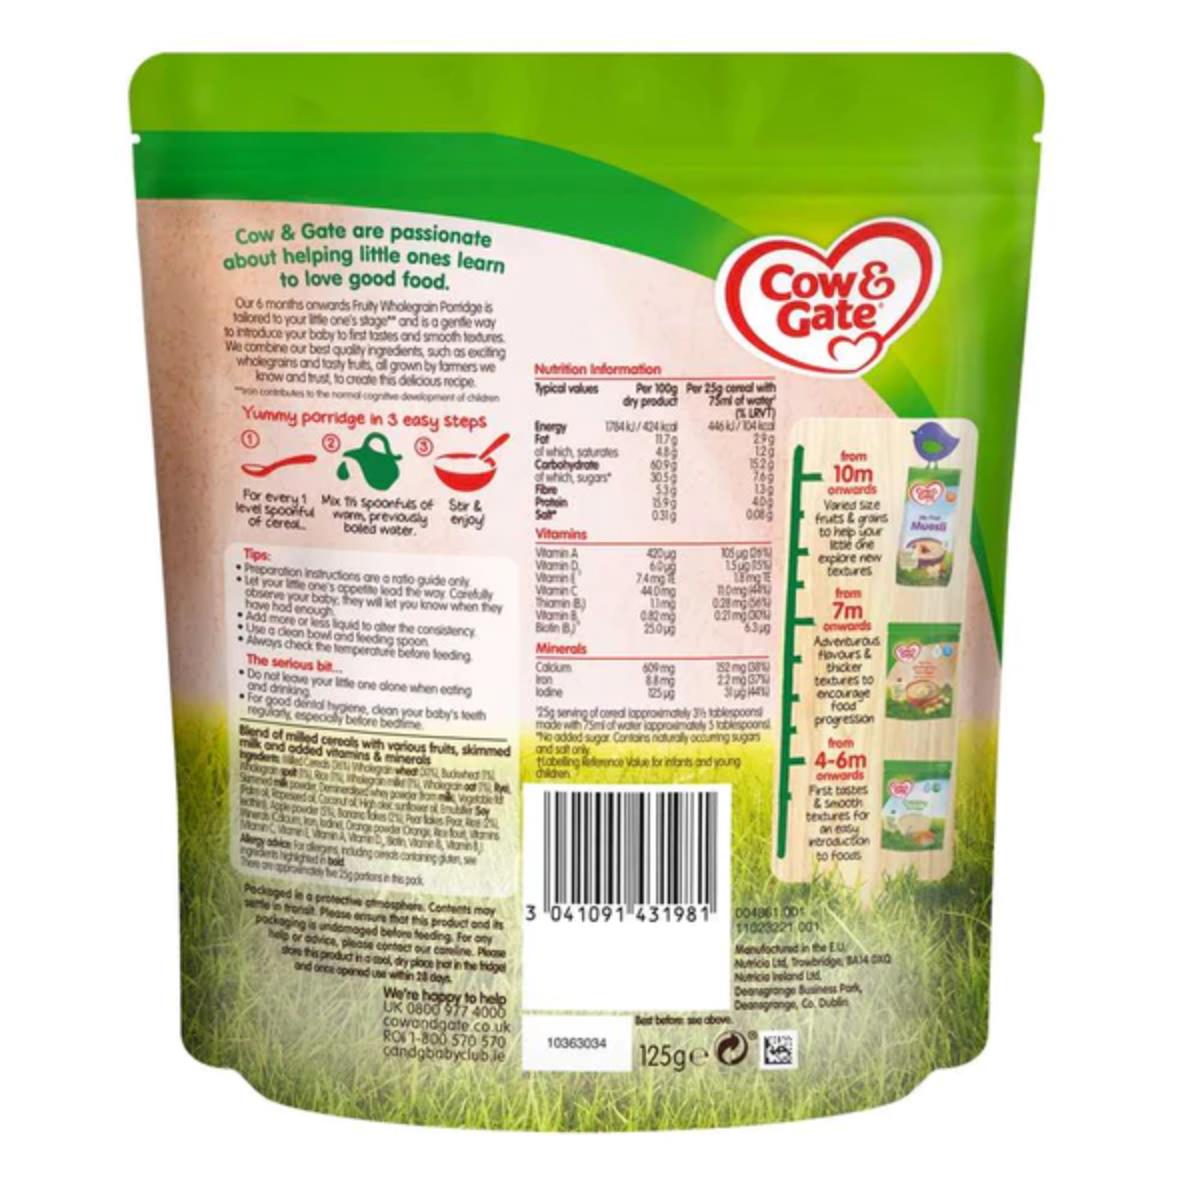 Cow & Gate Fruity Wholegrain Porridge (6m+) - 125g